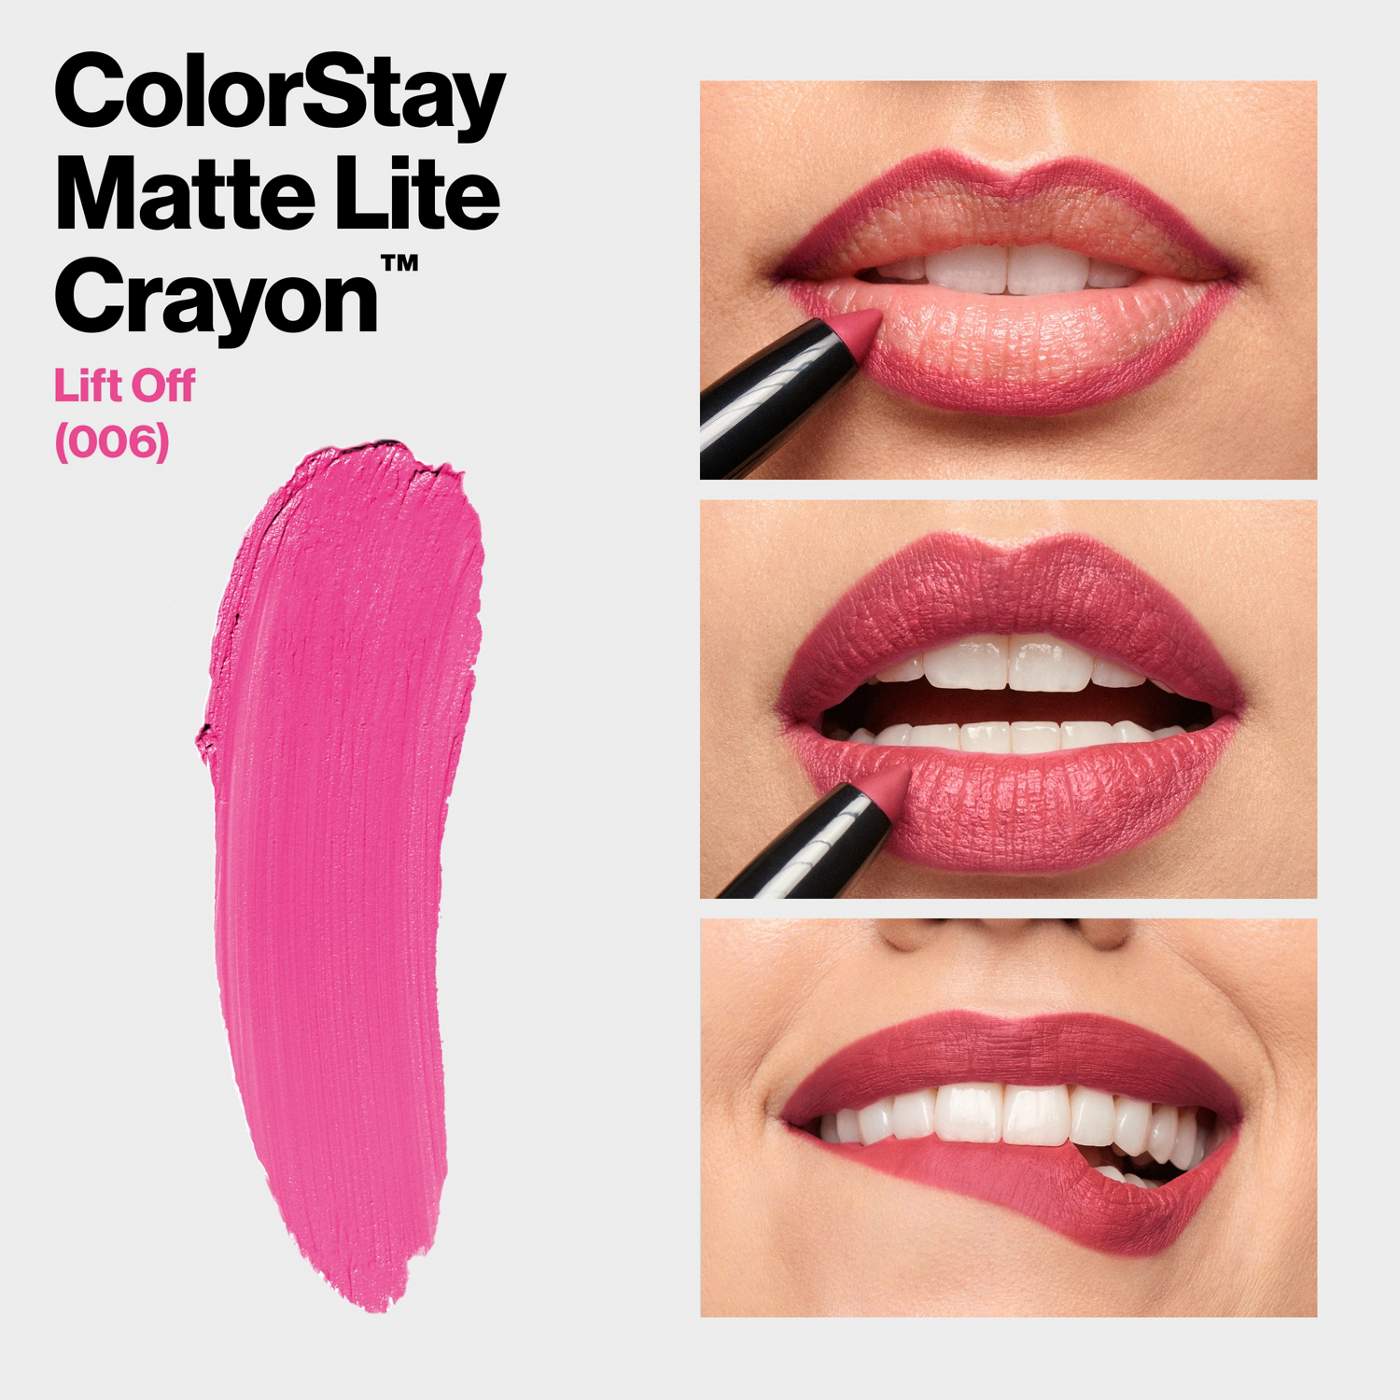 Revlon ColorStay Matte Lite Crayon Lipstick - Lift Off; image 4 of 7